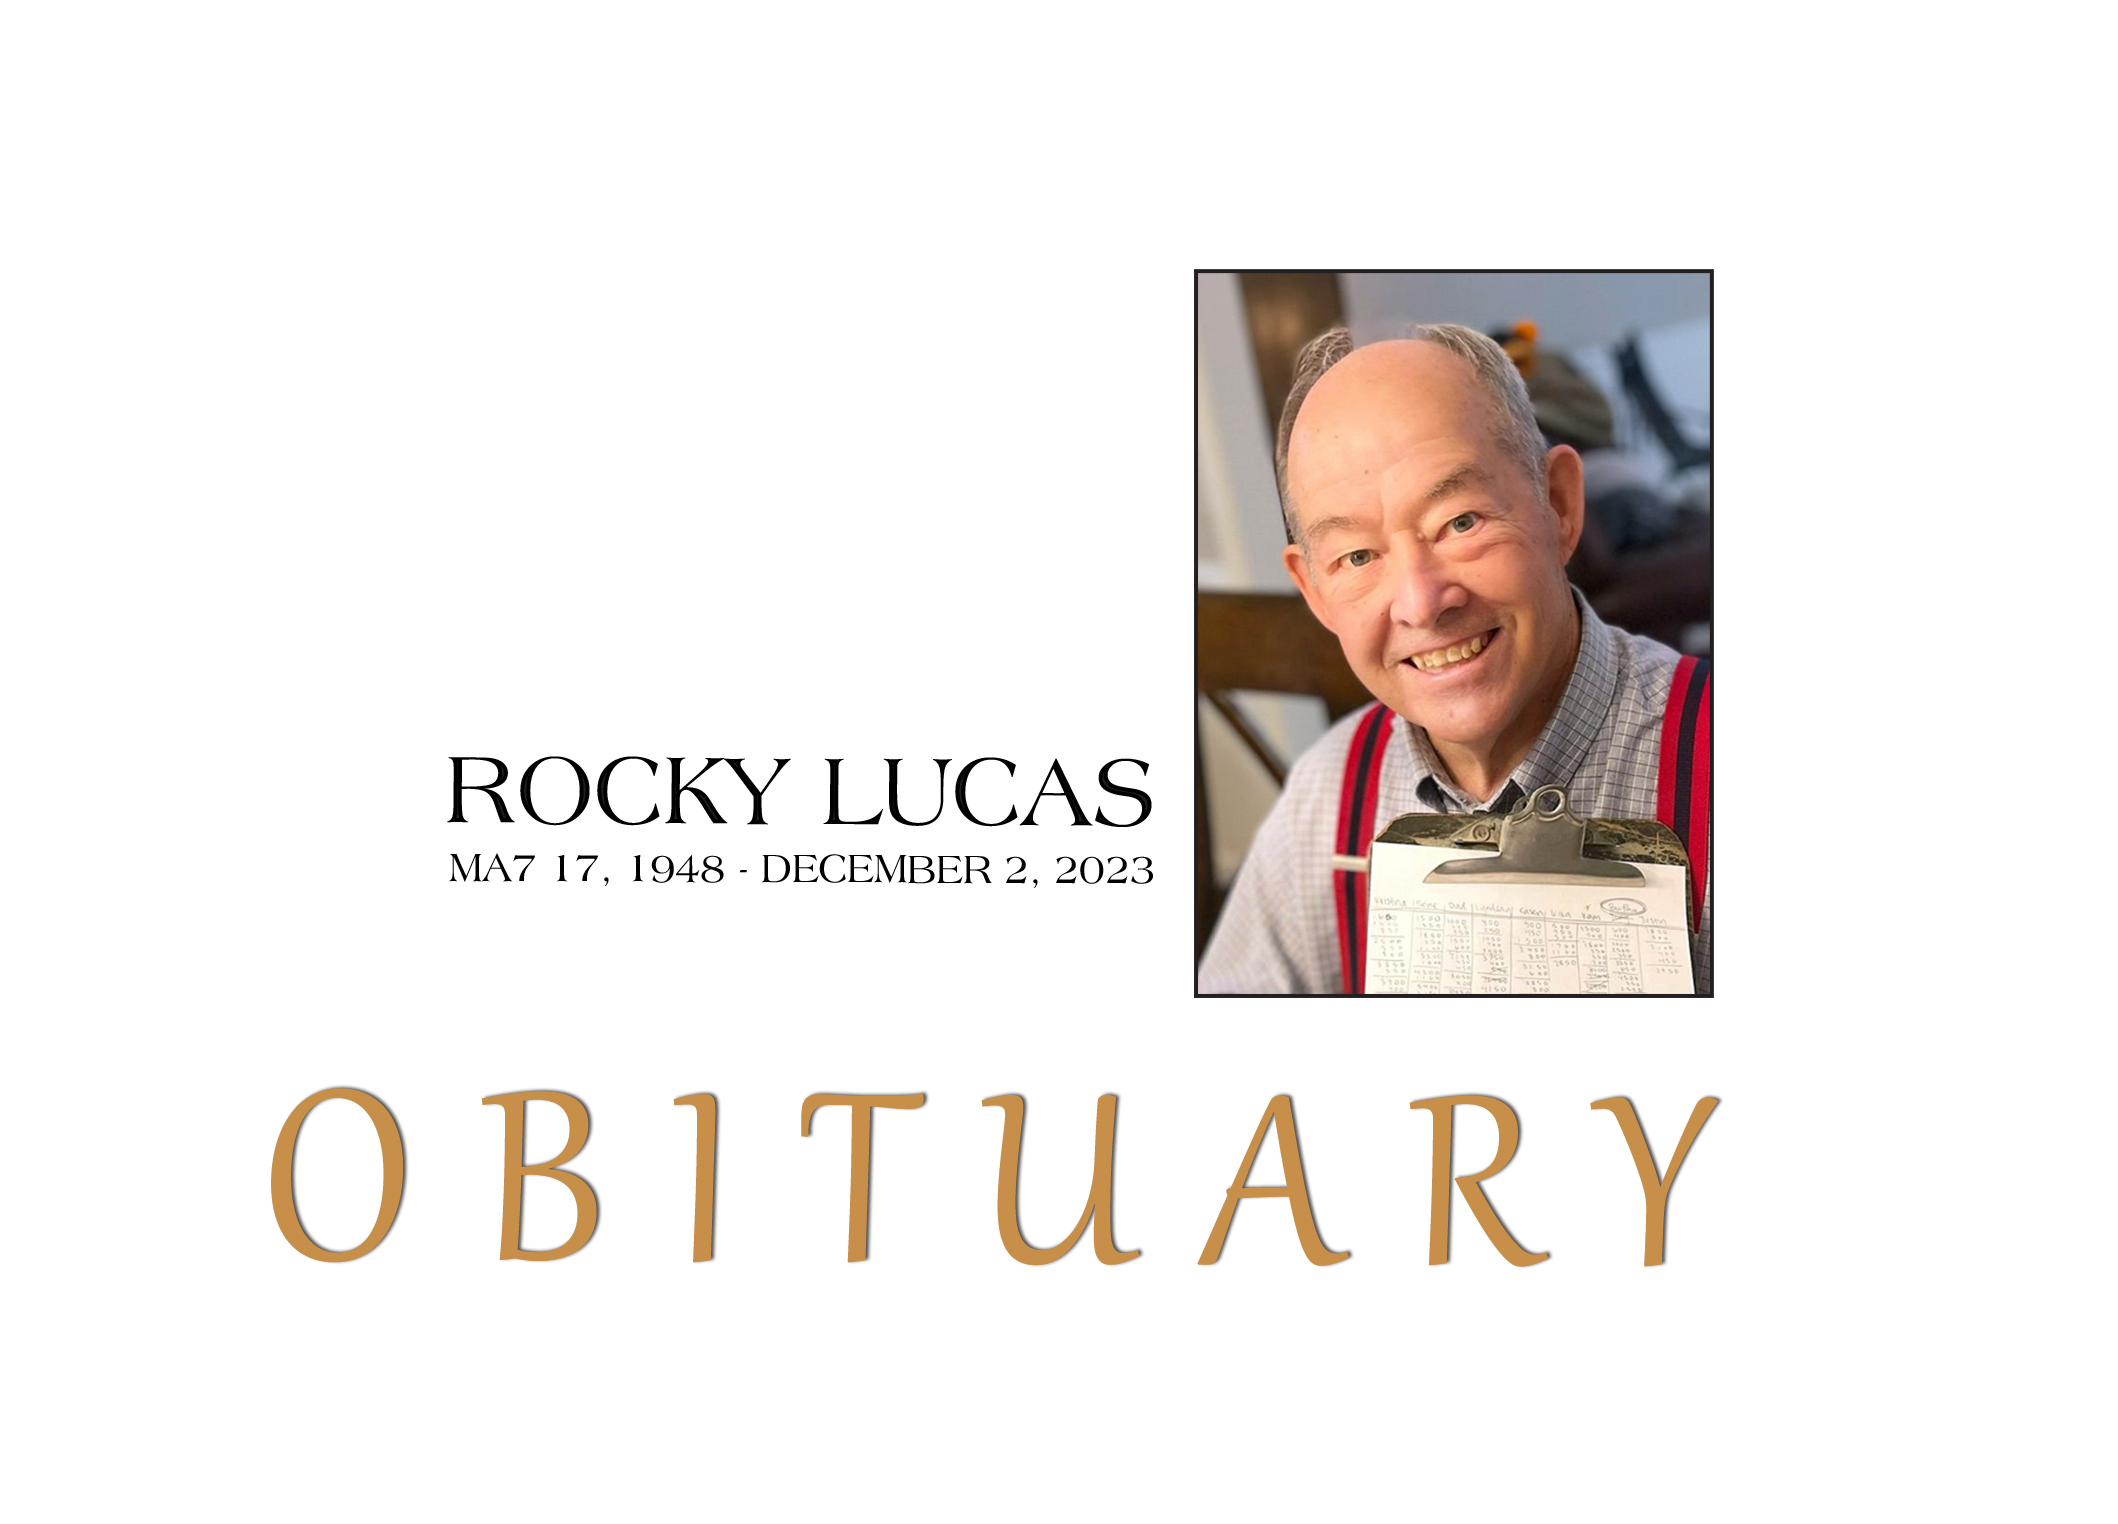 OBITUARY: ROCKY LUCAS